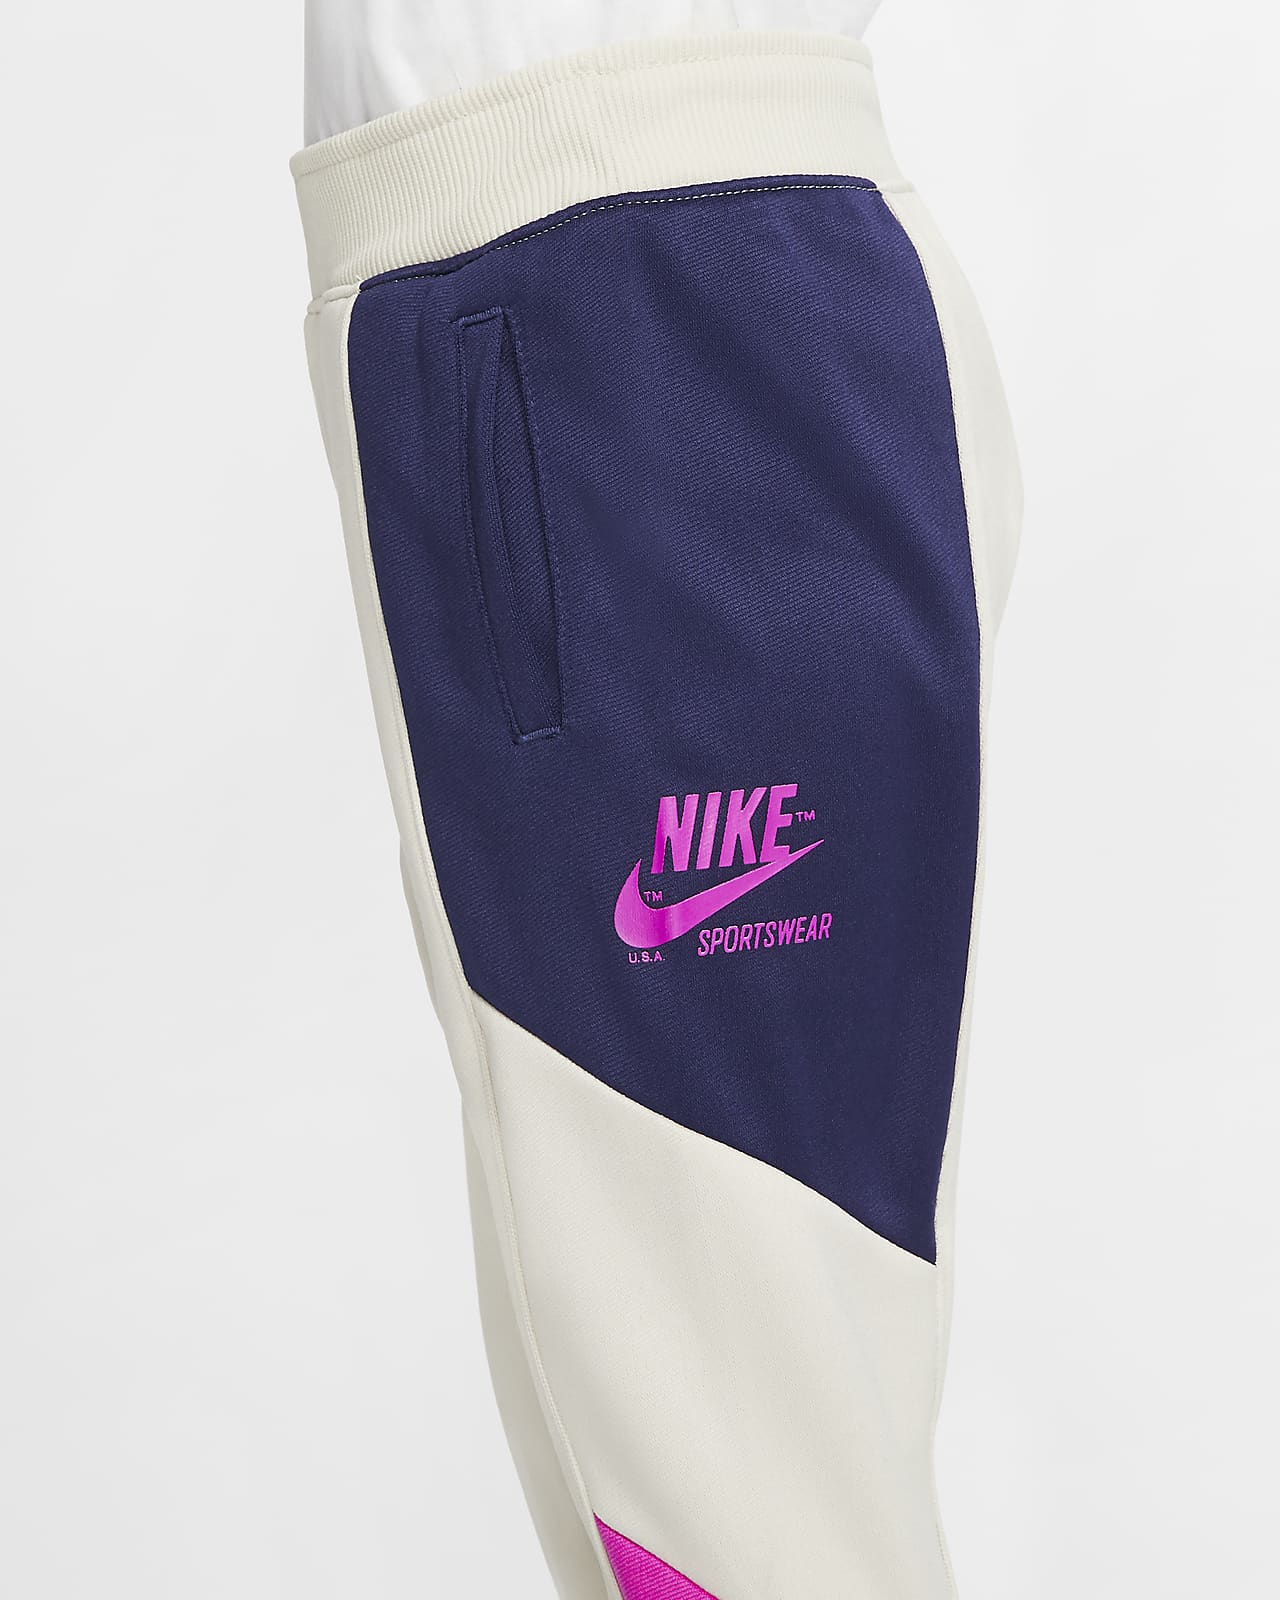 Nike Sportswear Cuffed Toddler Pants.